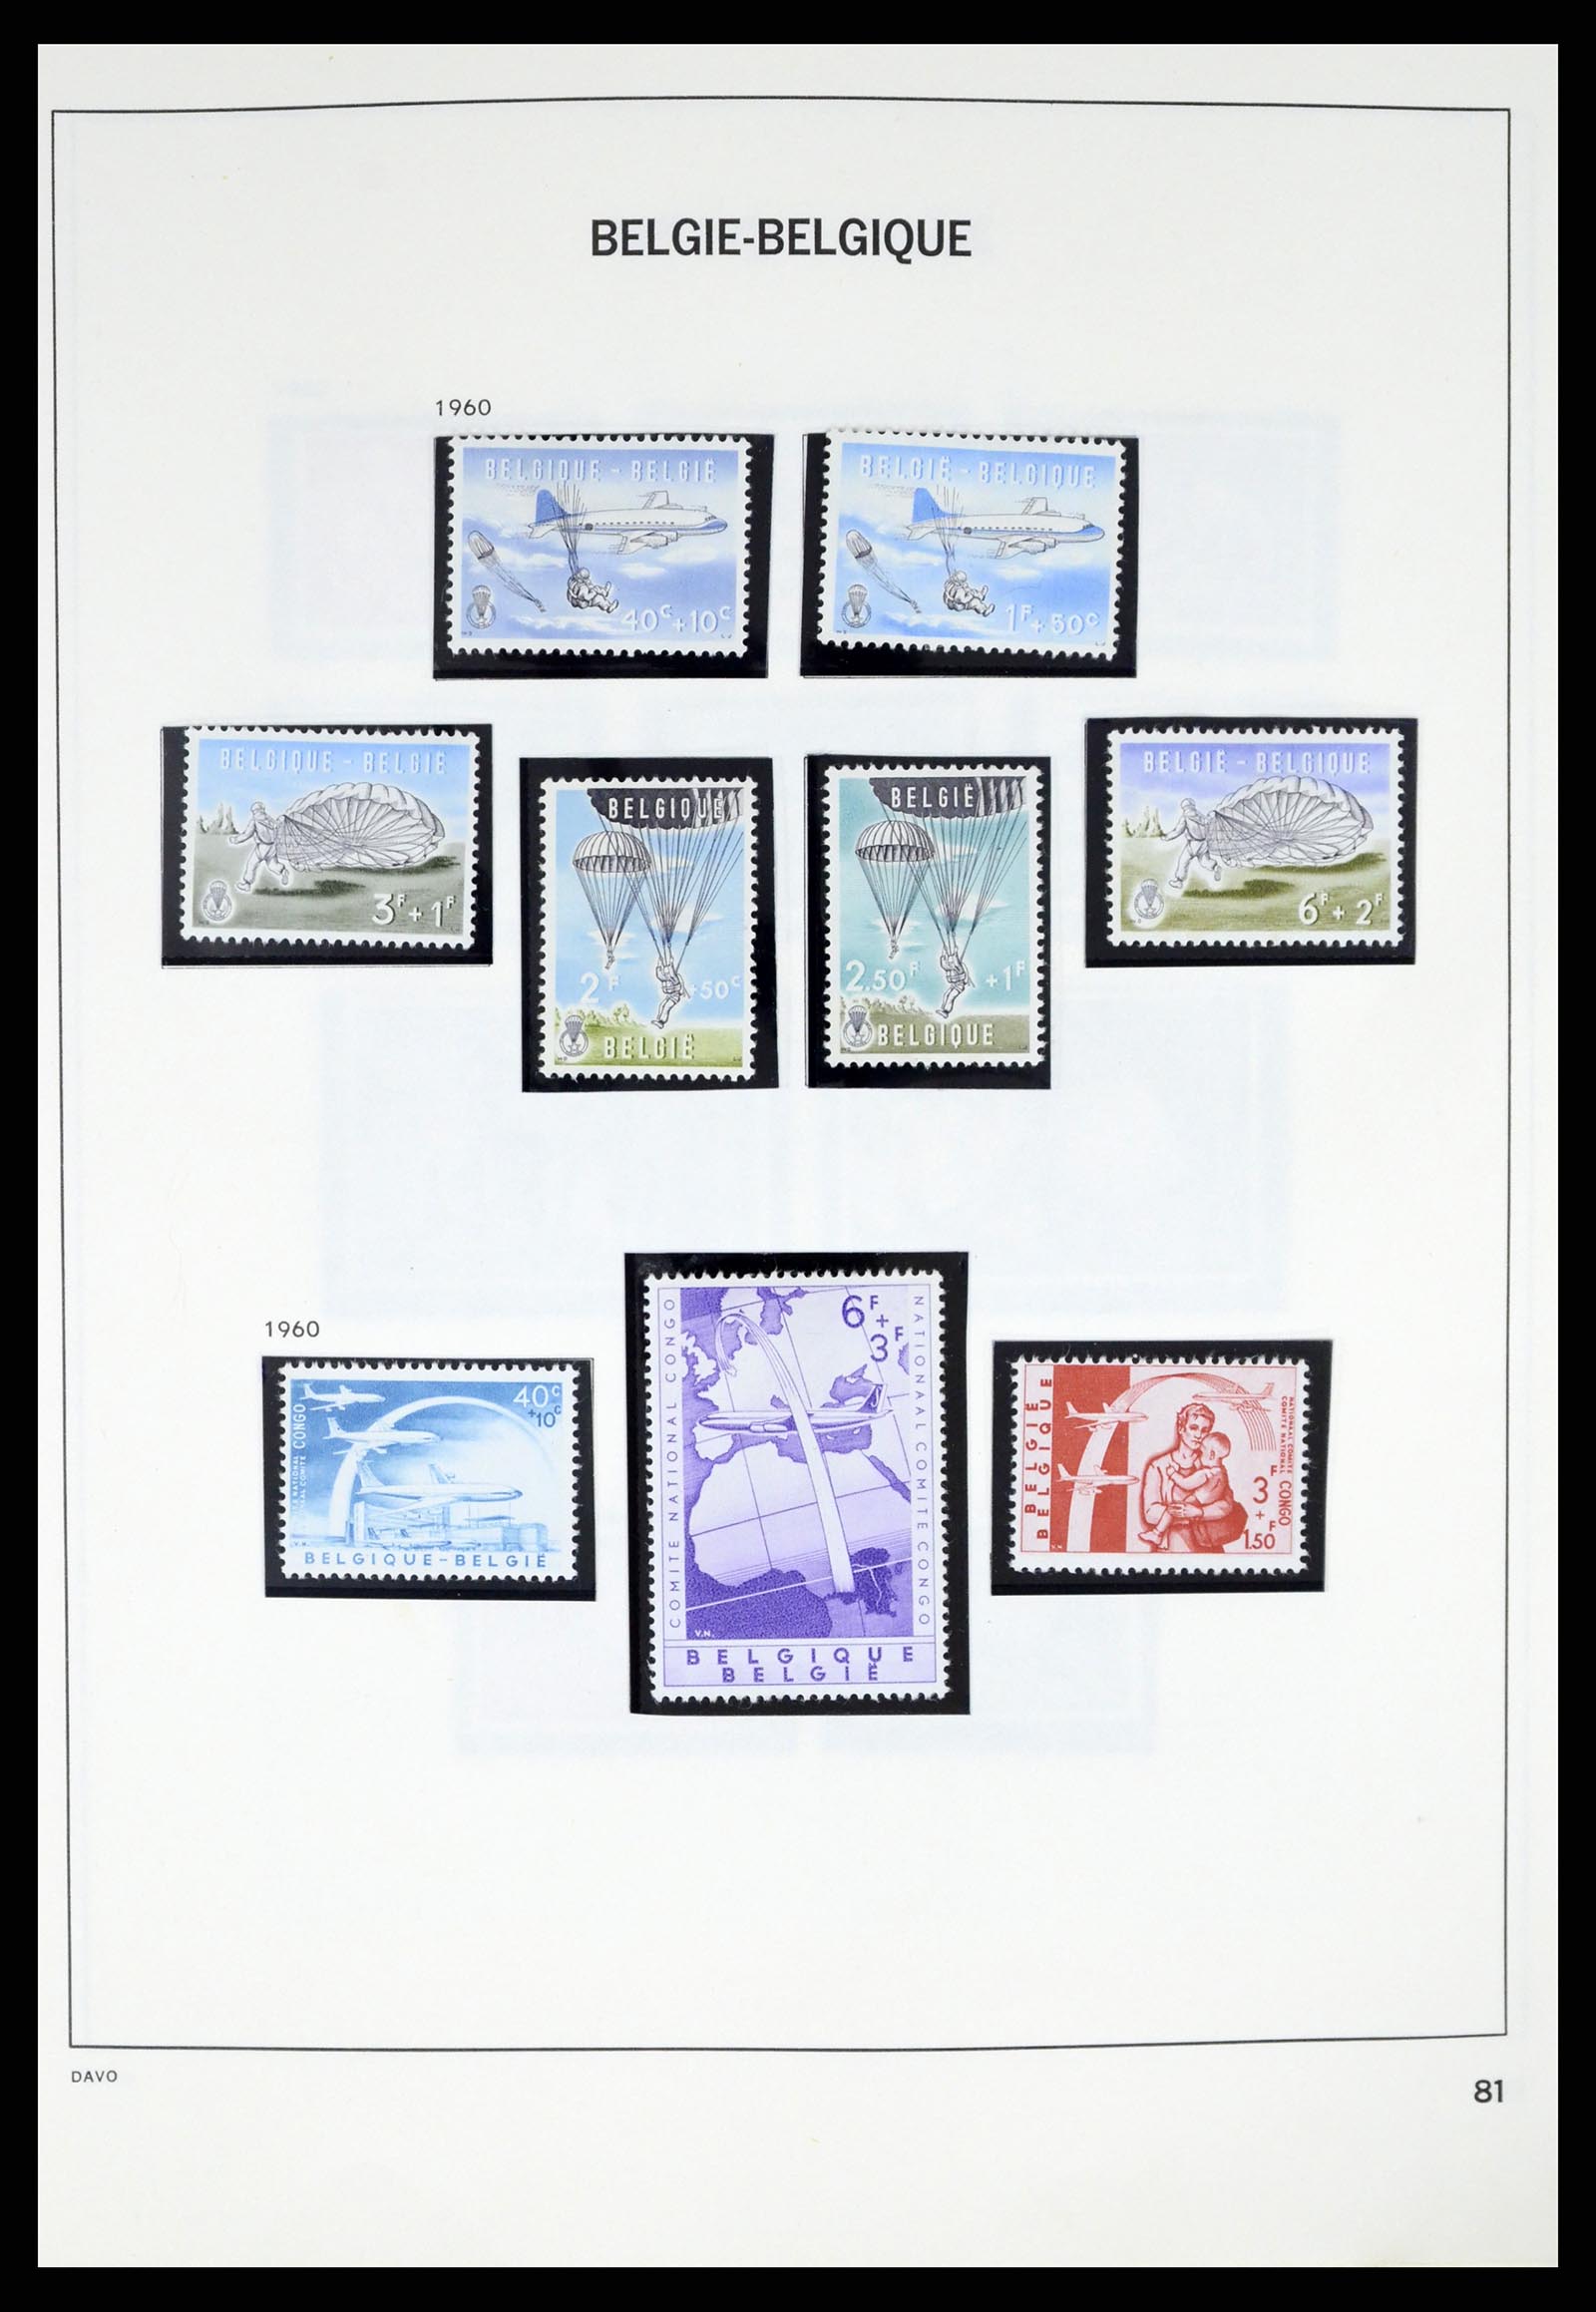 37367 077 - Stamp collection 37367 Belgium 1849-2003.